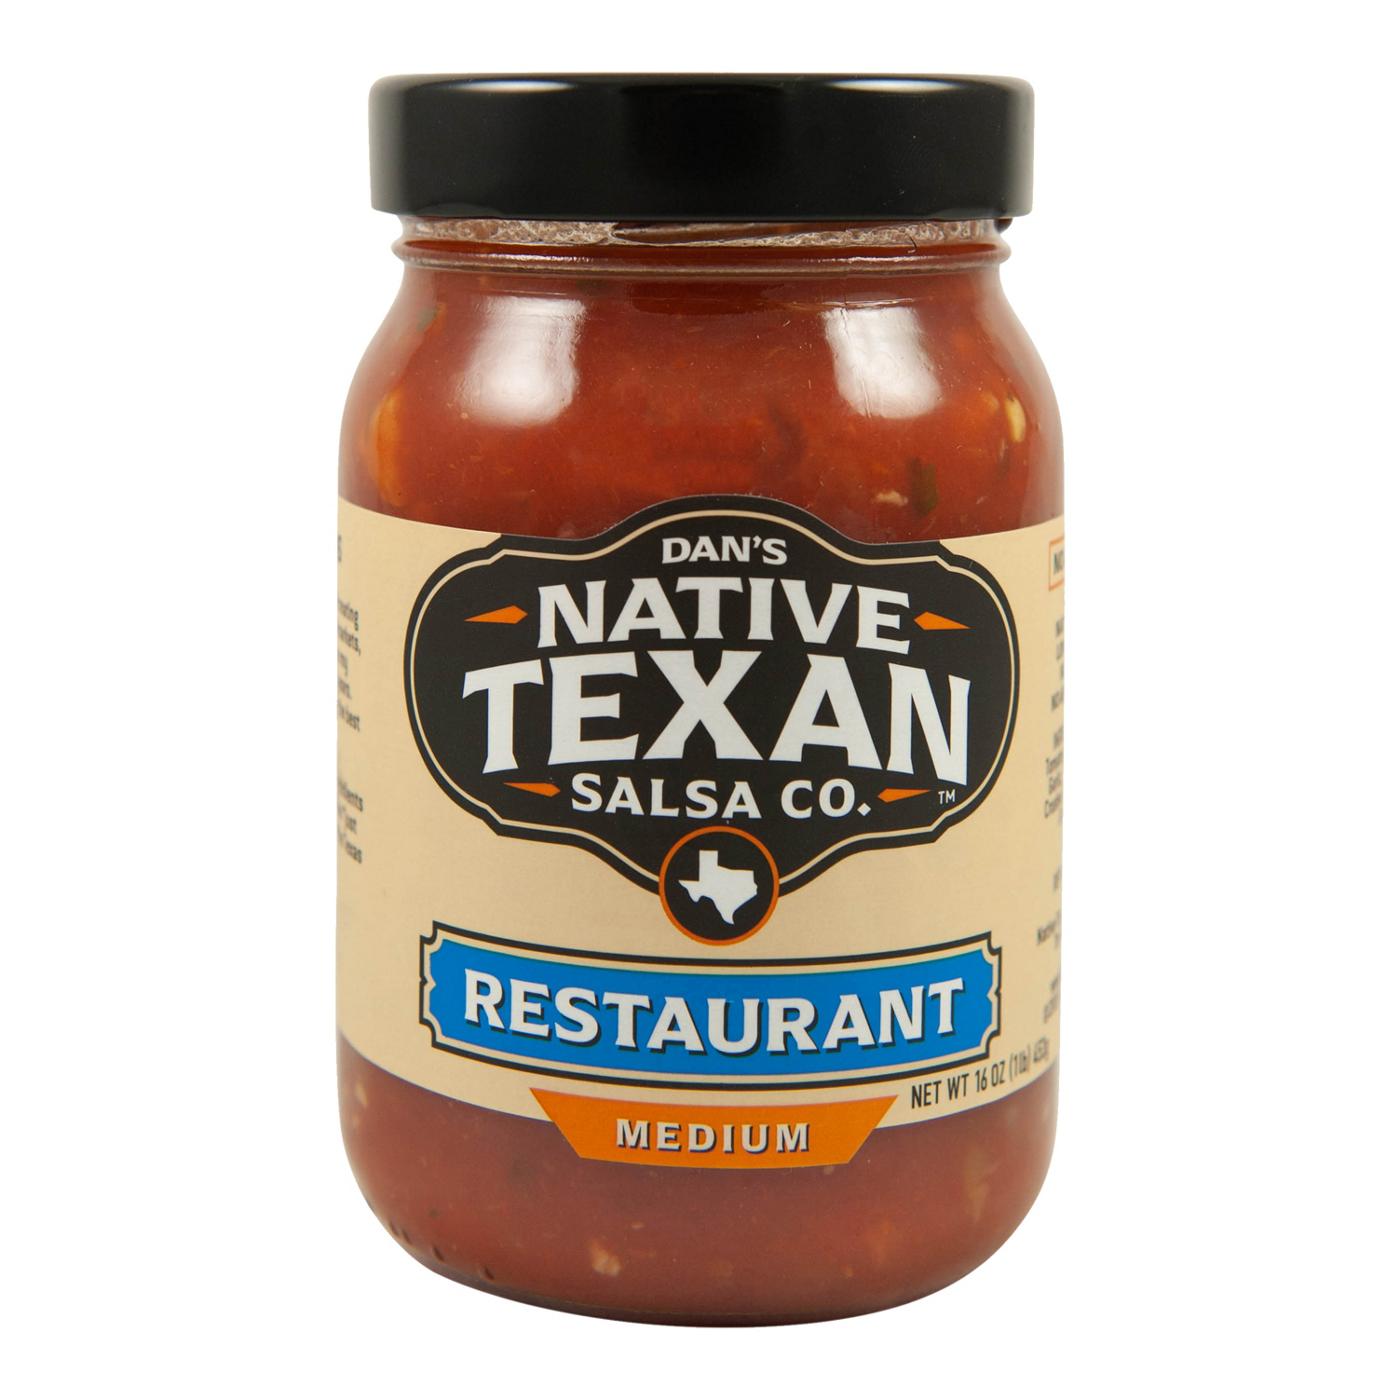 Native Texan Medium Restaurant Style Salsa; image 1 of 2